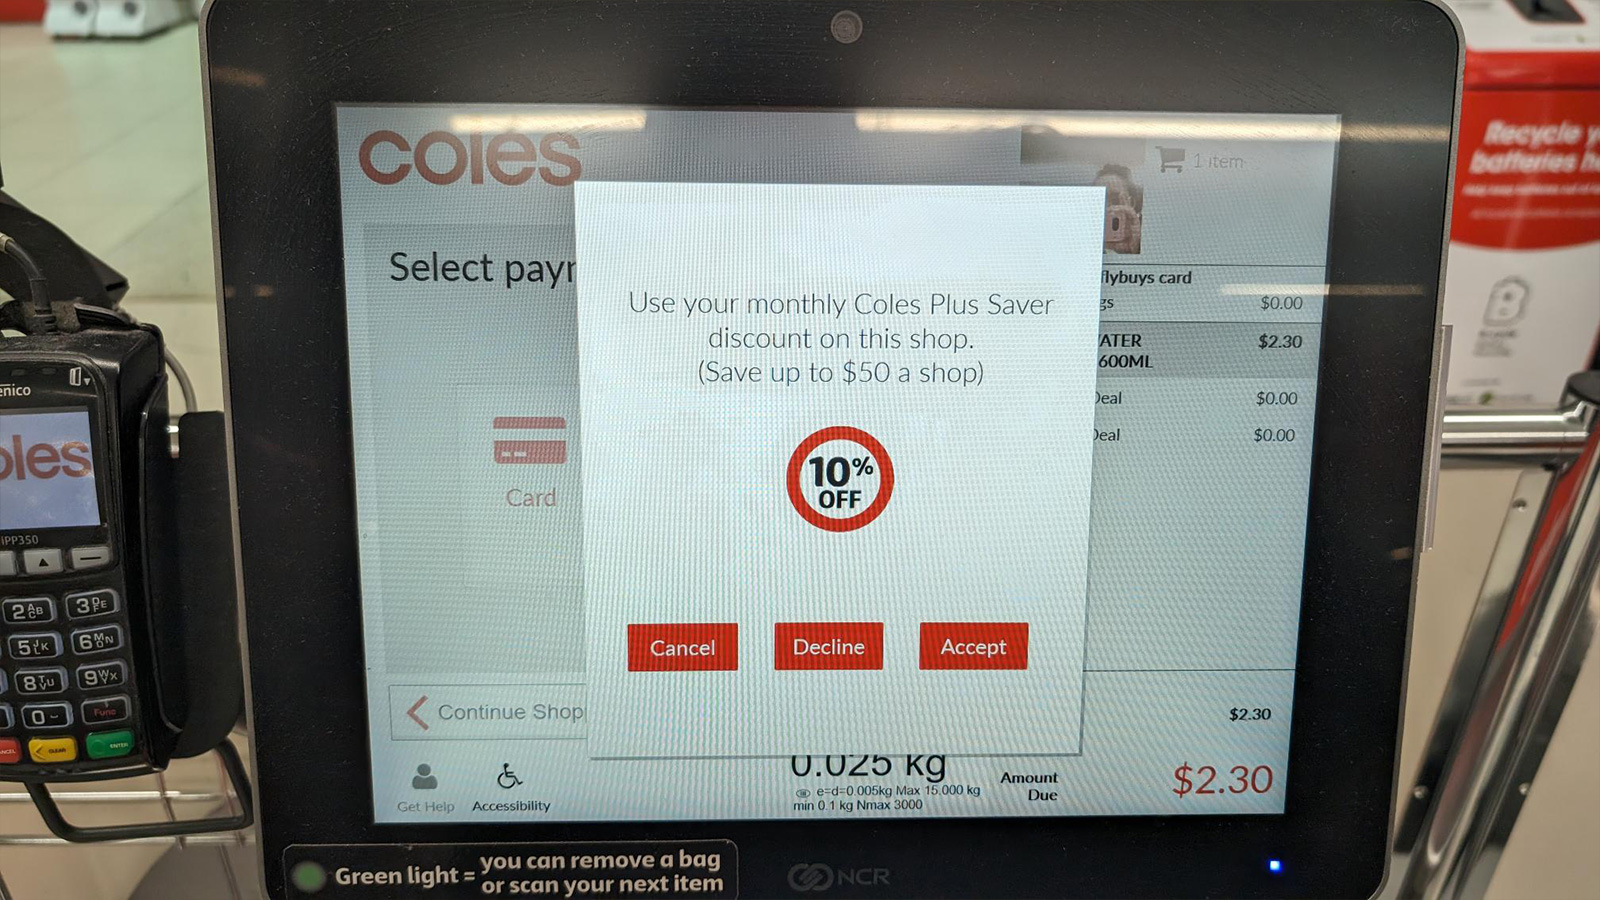 Coles Plus Saver 10% discount at checkout